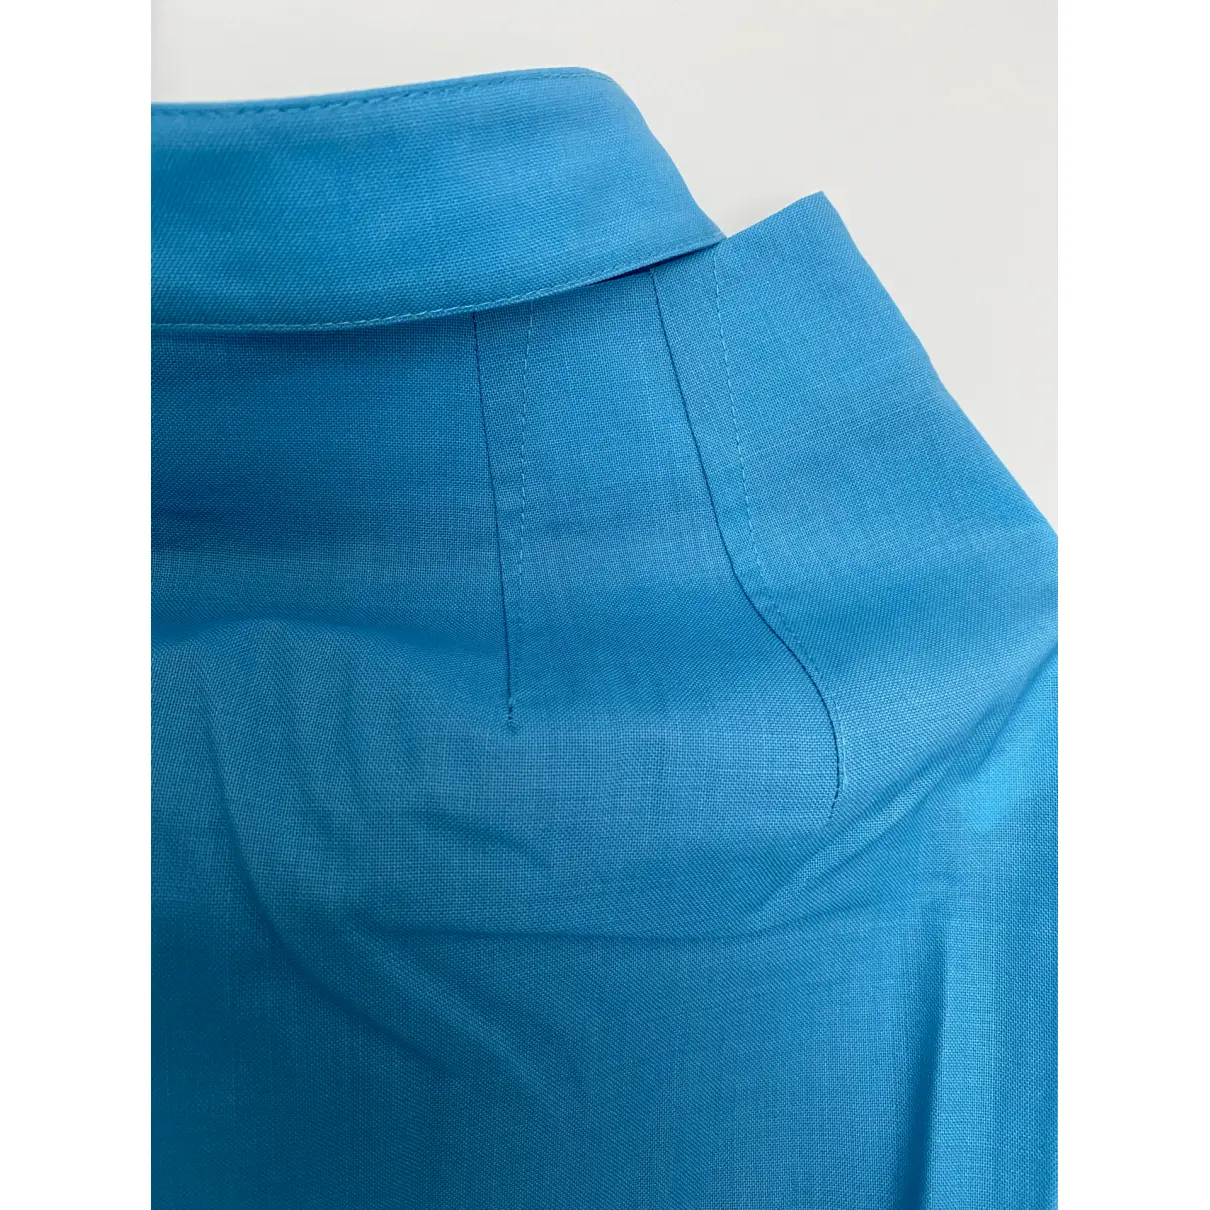 Buy Jacquemus Wool mid-length skirt online